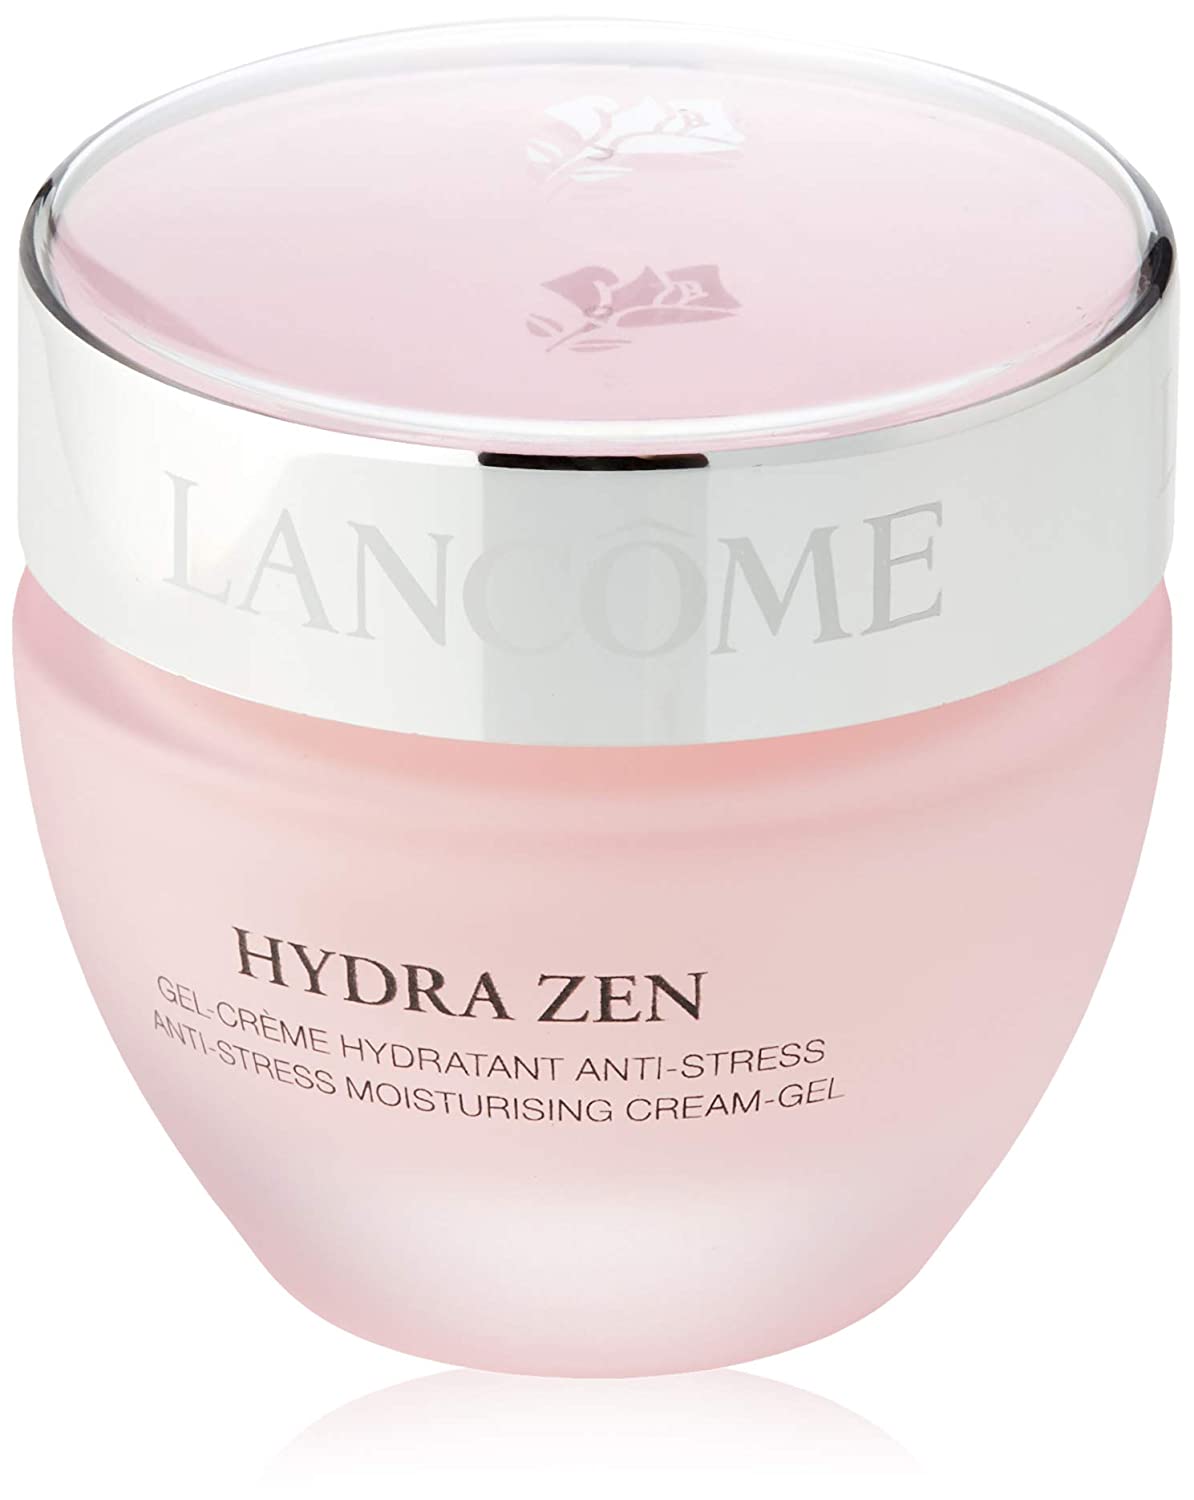 Lancome Lancôme Hydra Zen Anti-Stress Moisturising Cream Gel 50ml